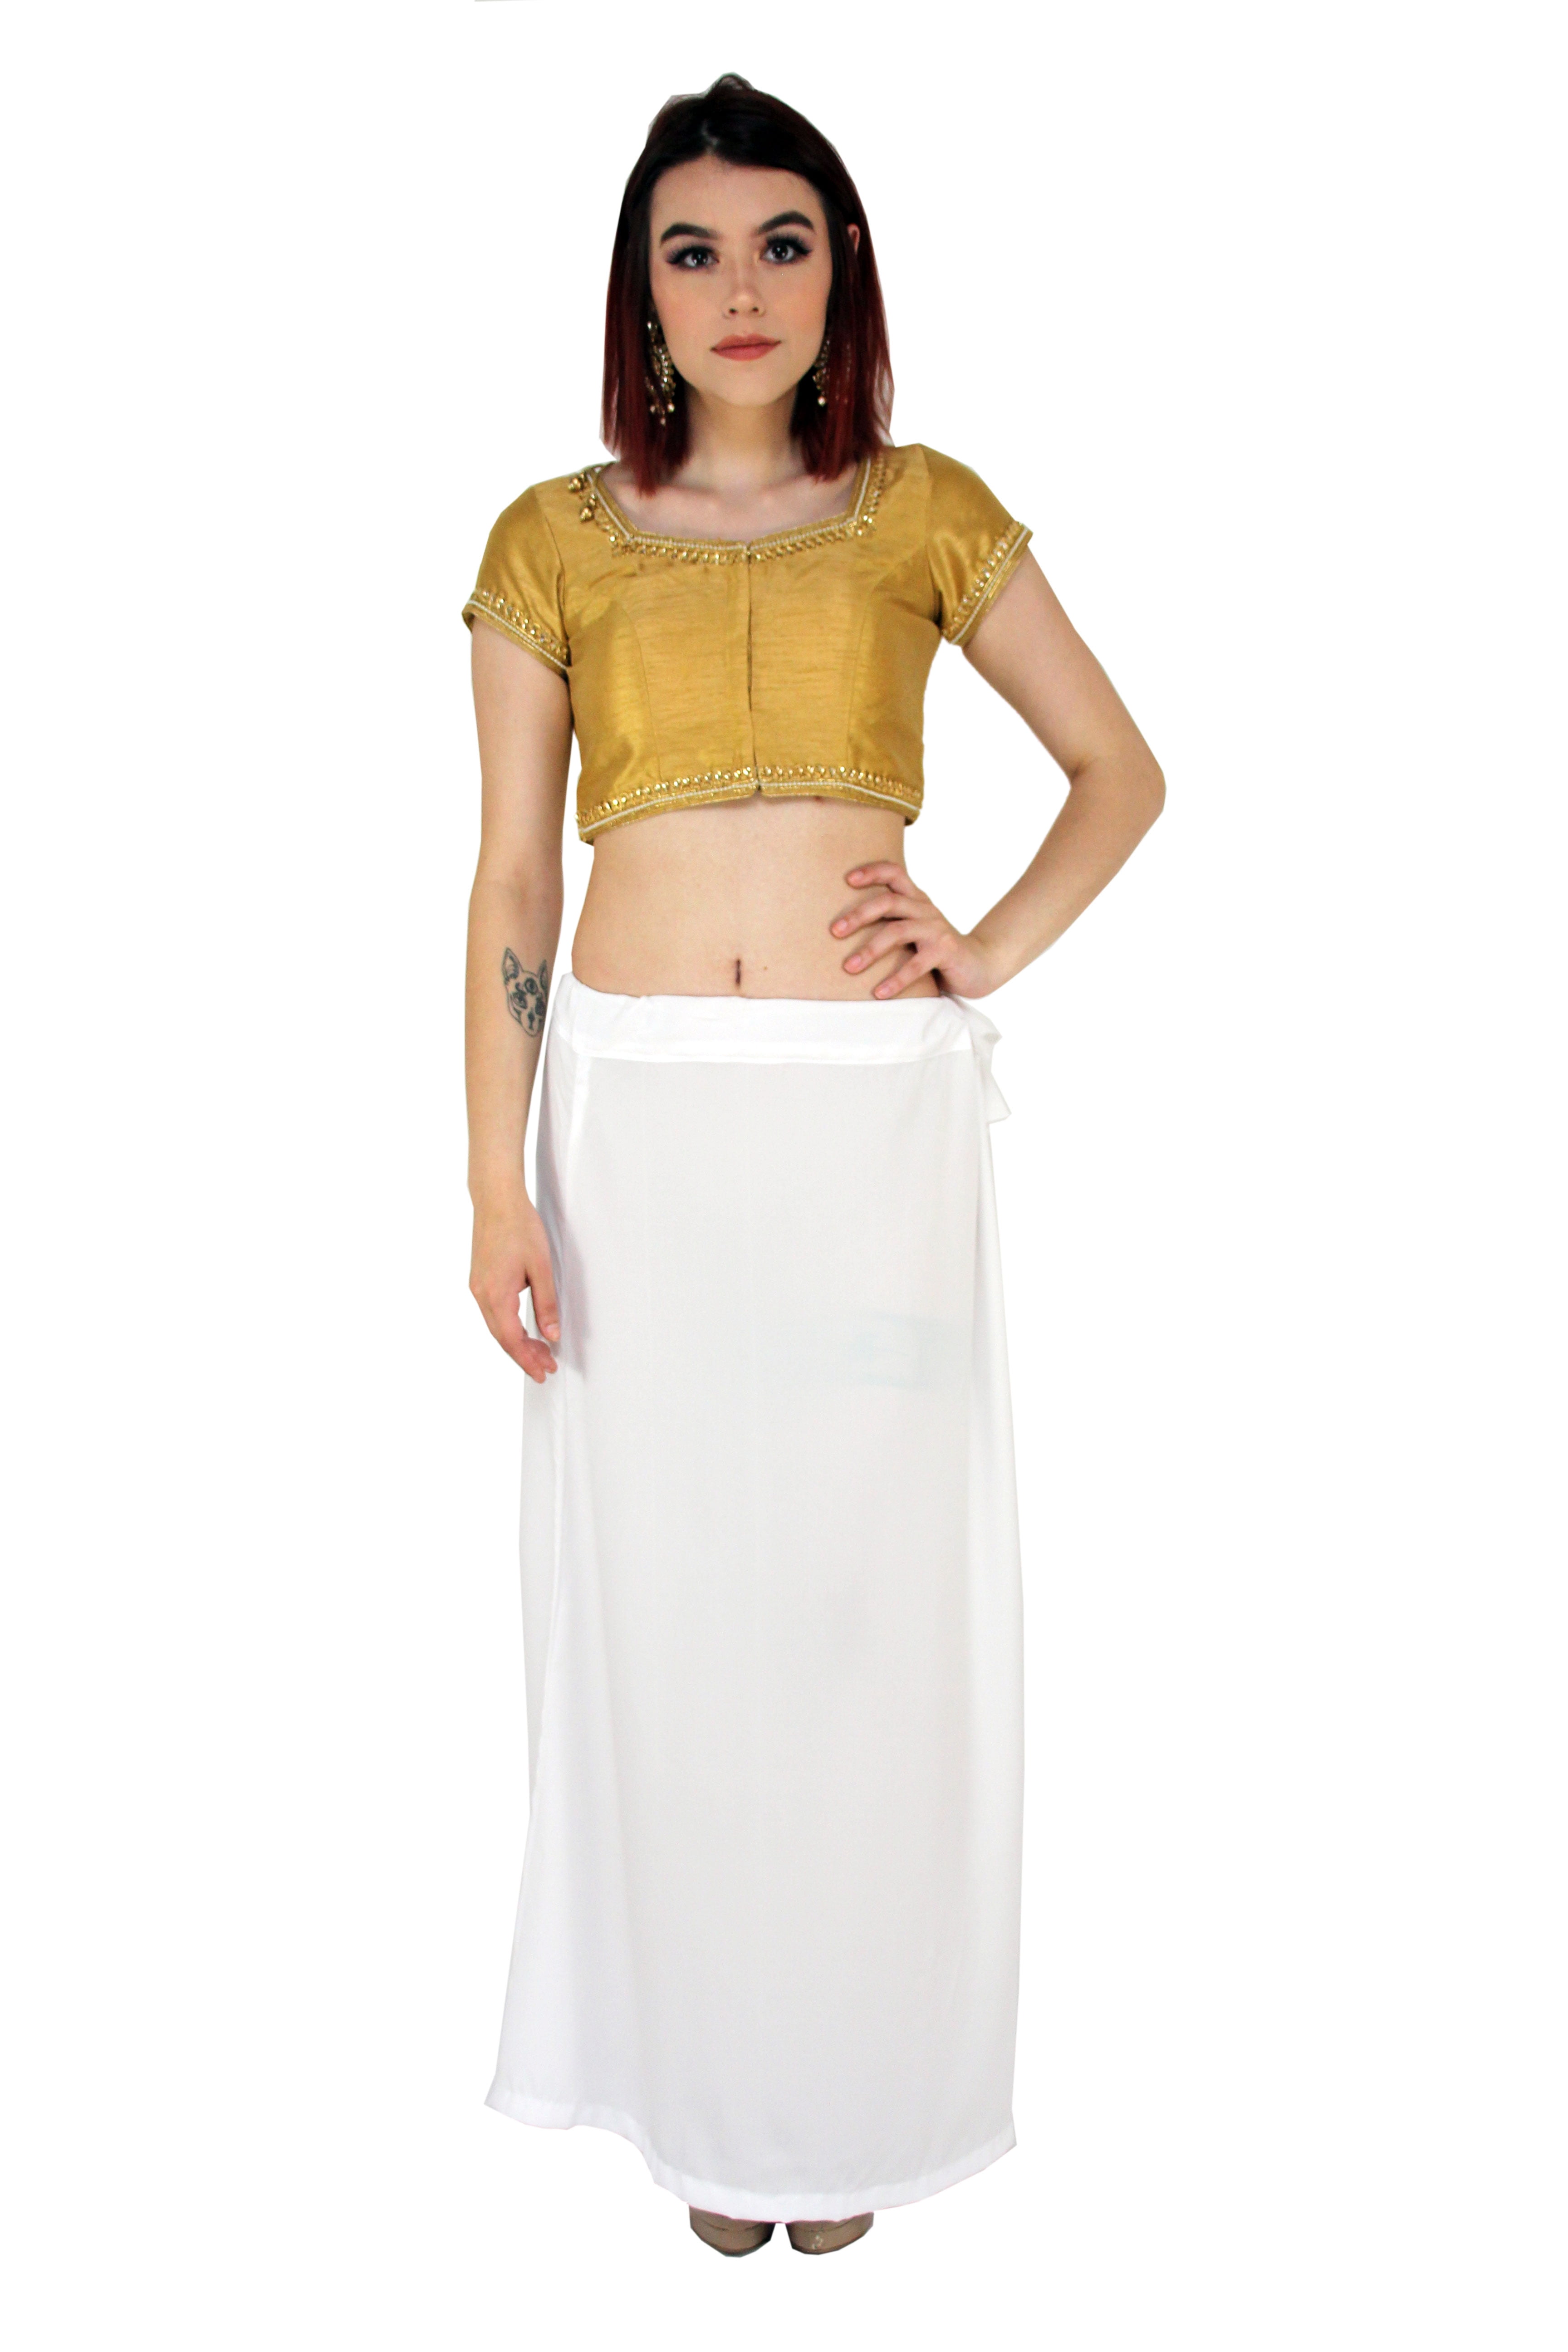 Sari Petticoat Stitched Indian Saree Petticoat Adjustable Waist